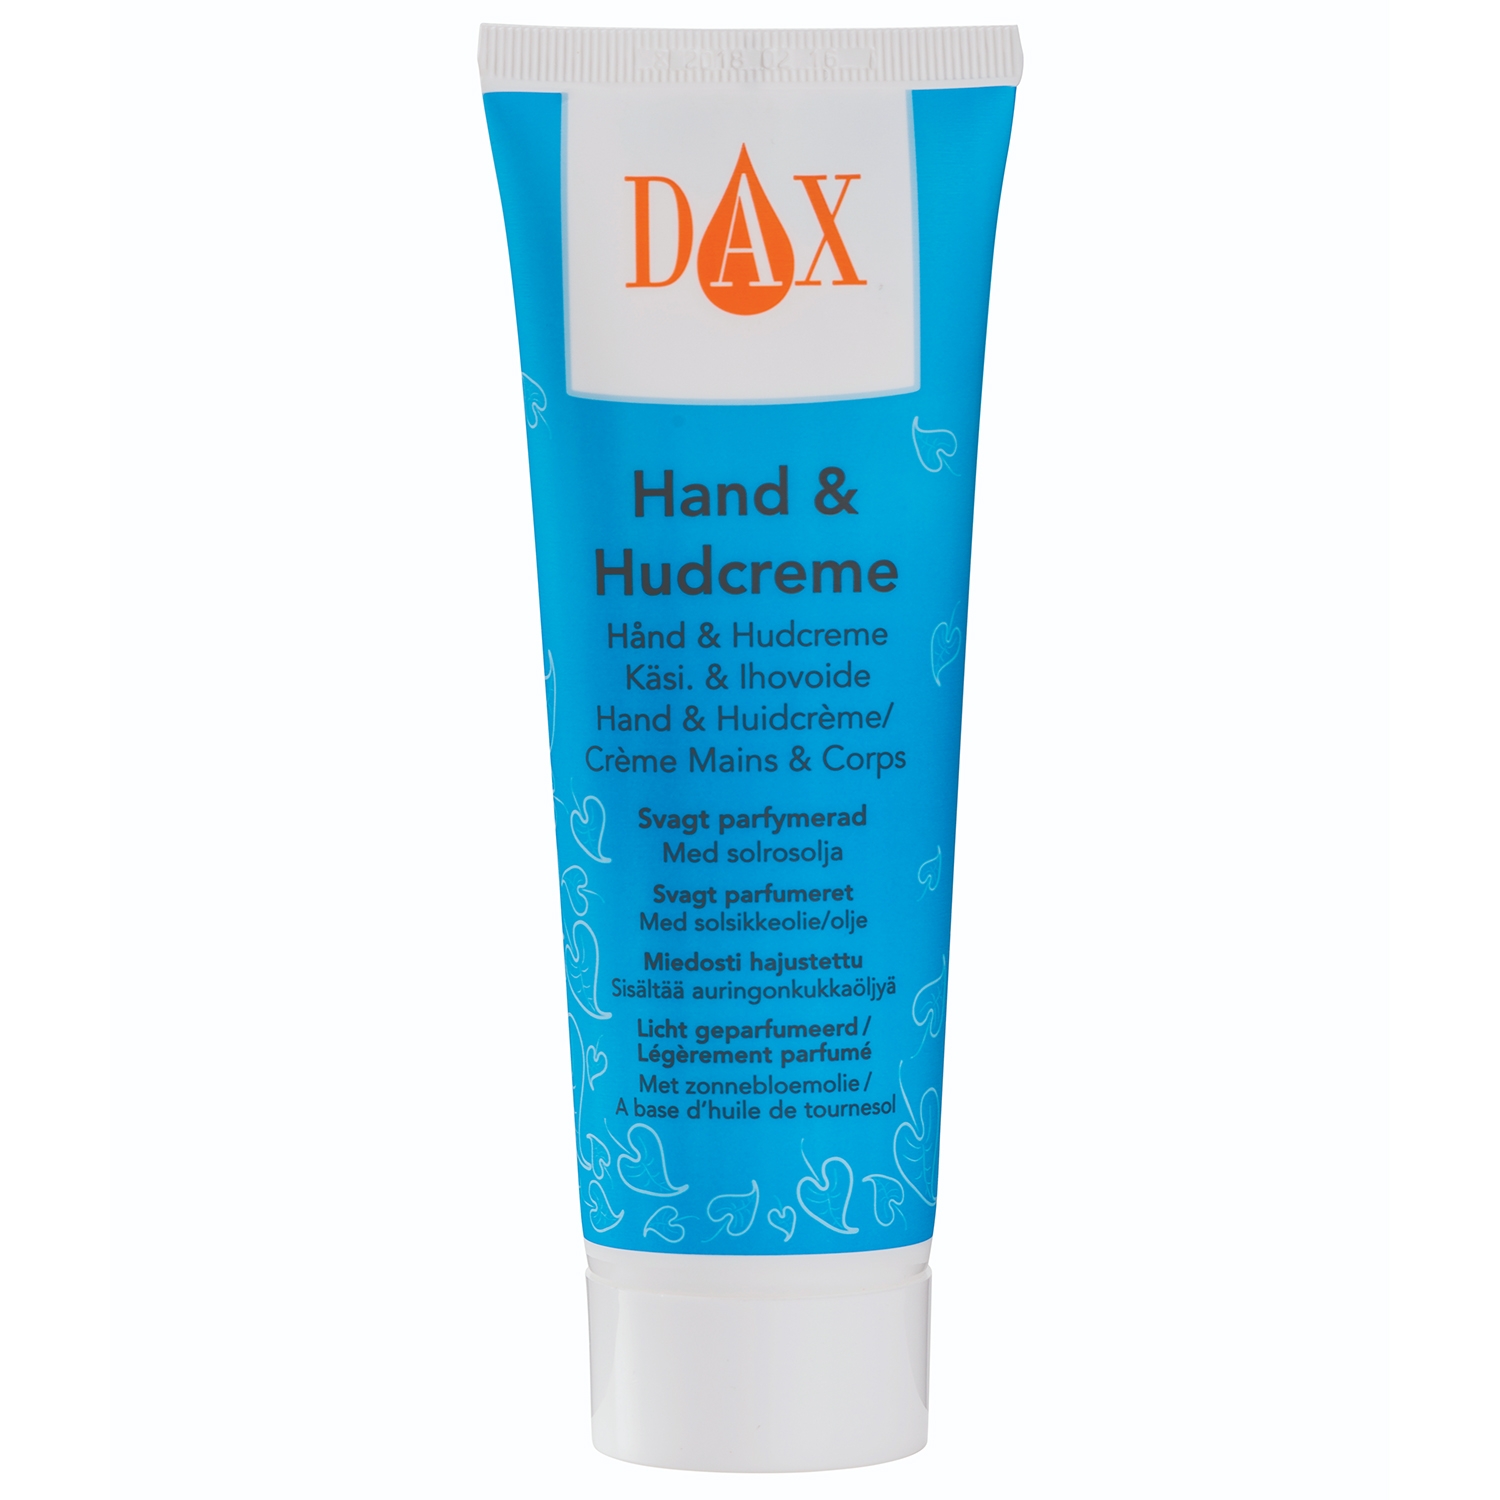 Dax handcrème / huidcrème - tube 125 ml